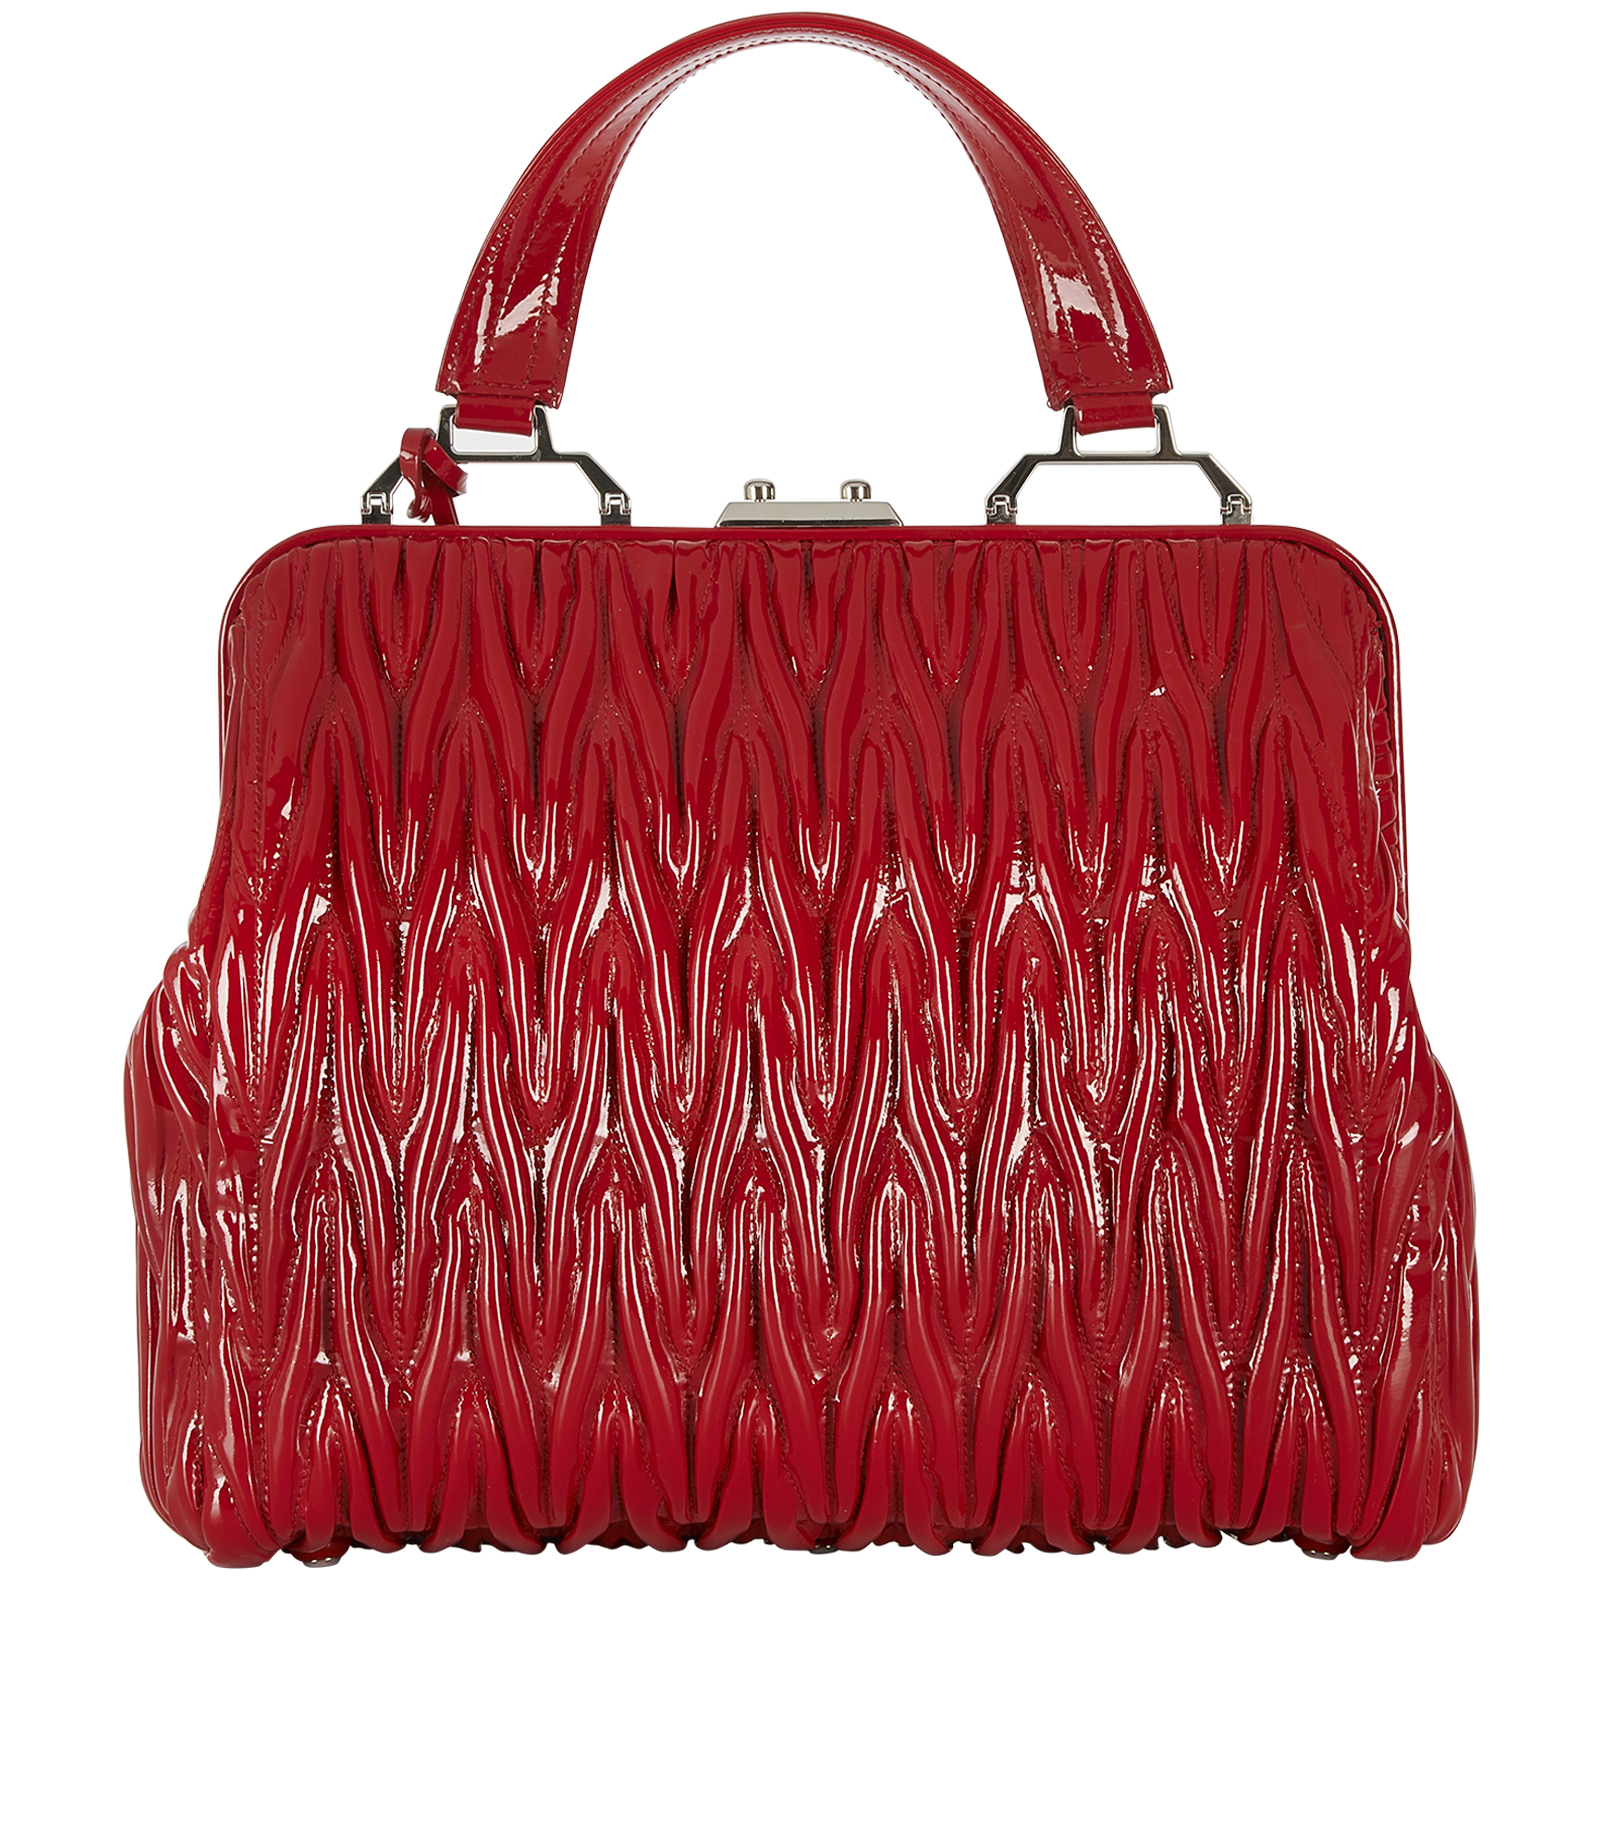 Miu Miu Red Leather Gathered Top Handle Crossbody Convertible Hobo Bag EUC